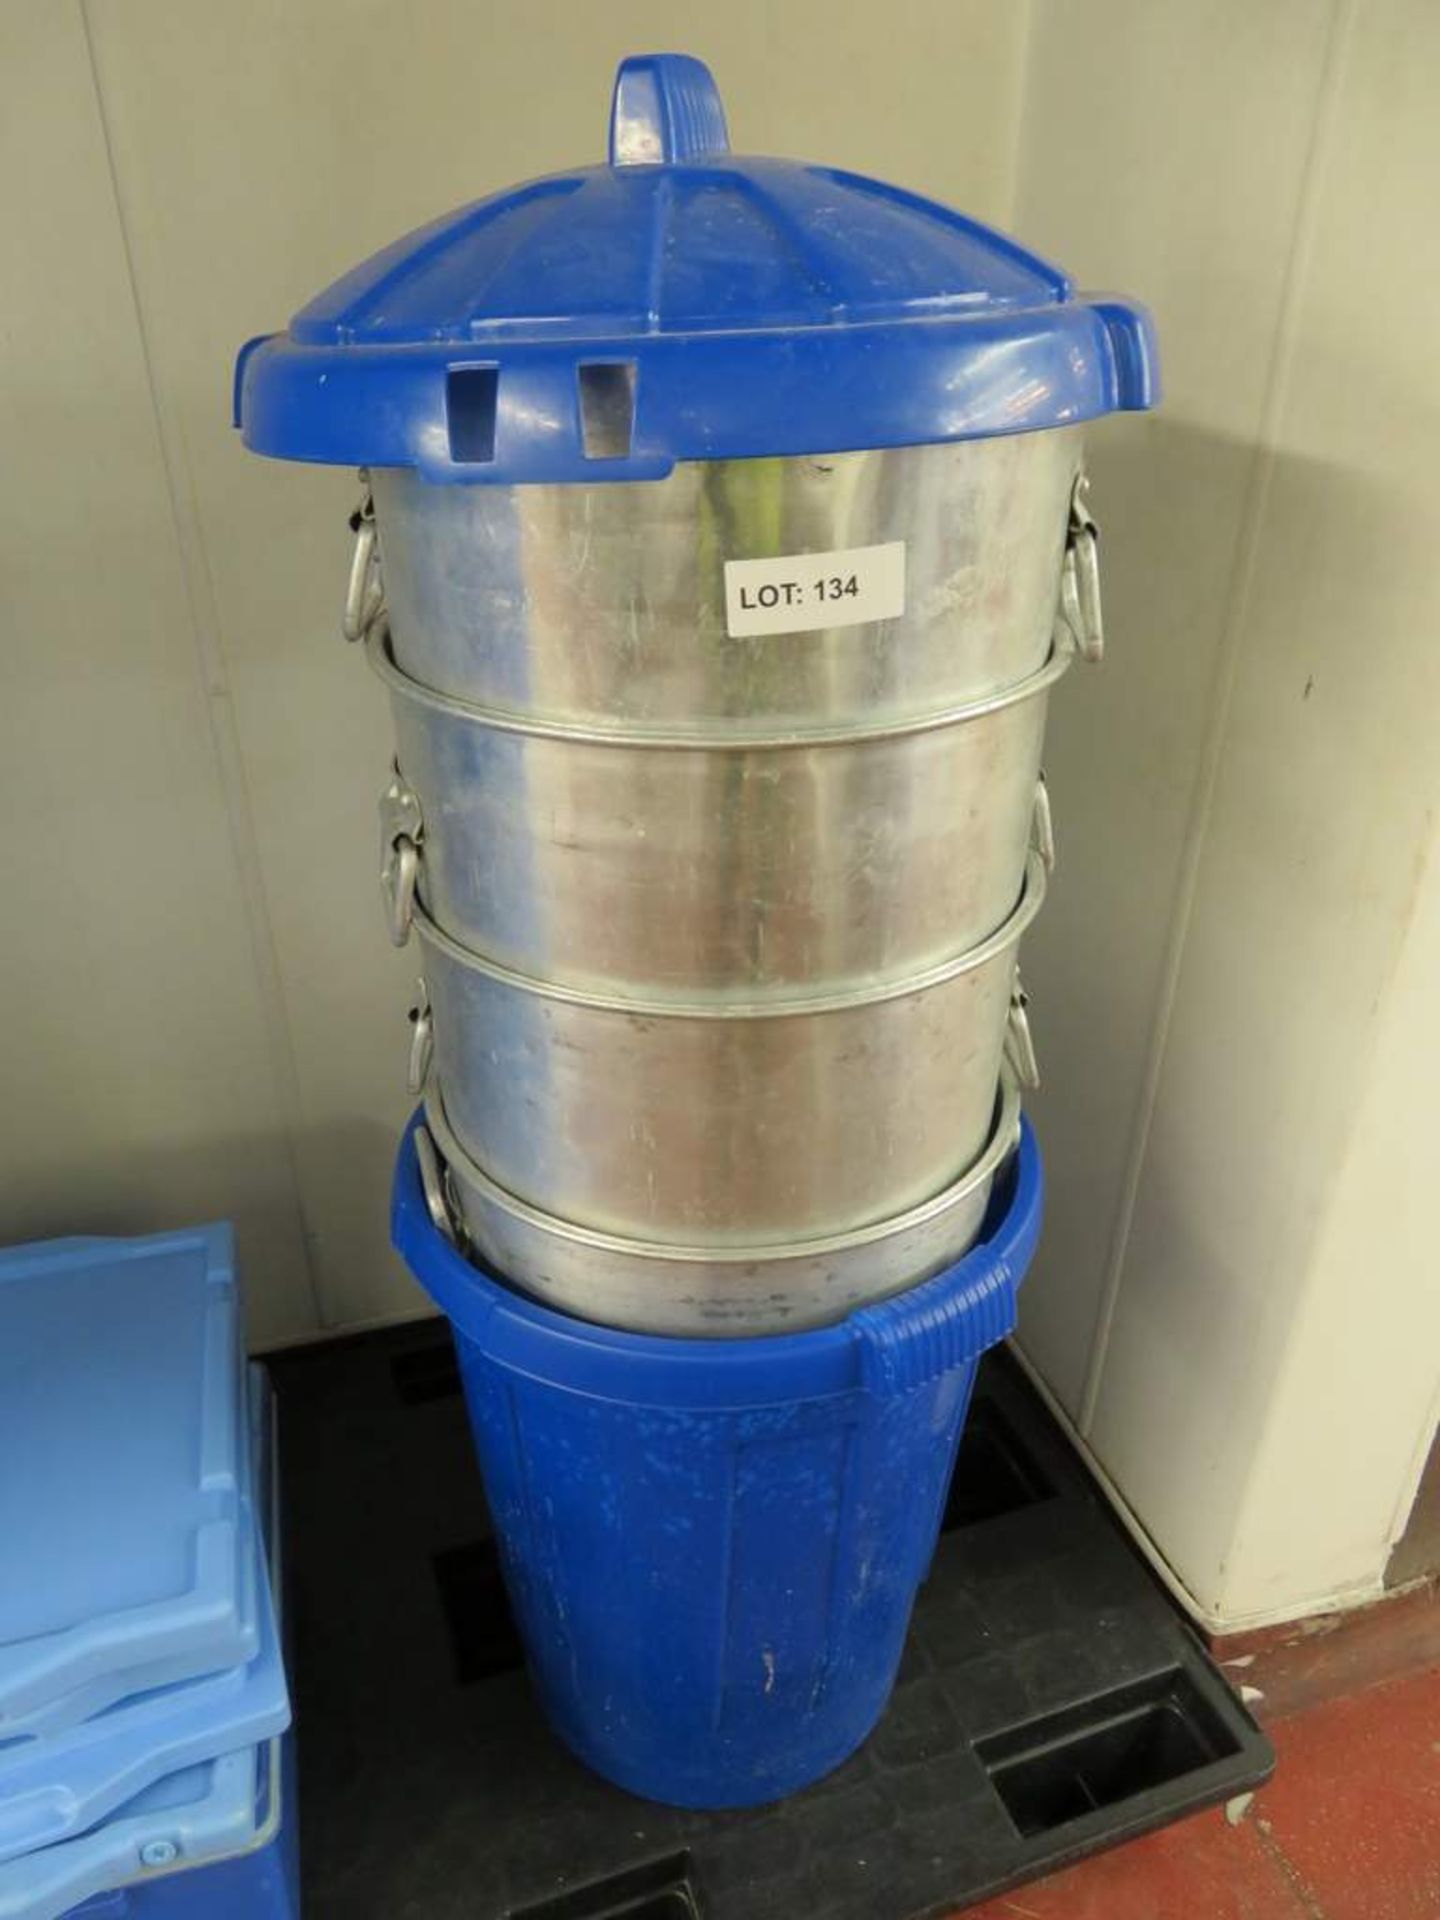 4x Large metal bins and 1x Blue plastic bin